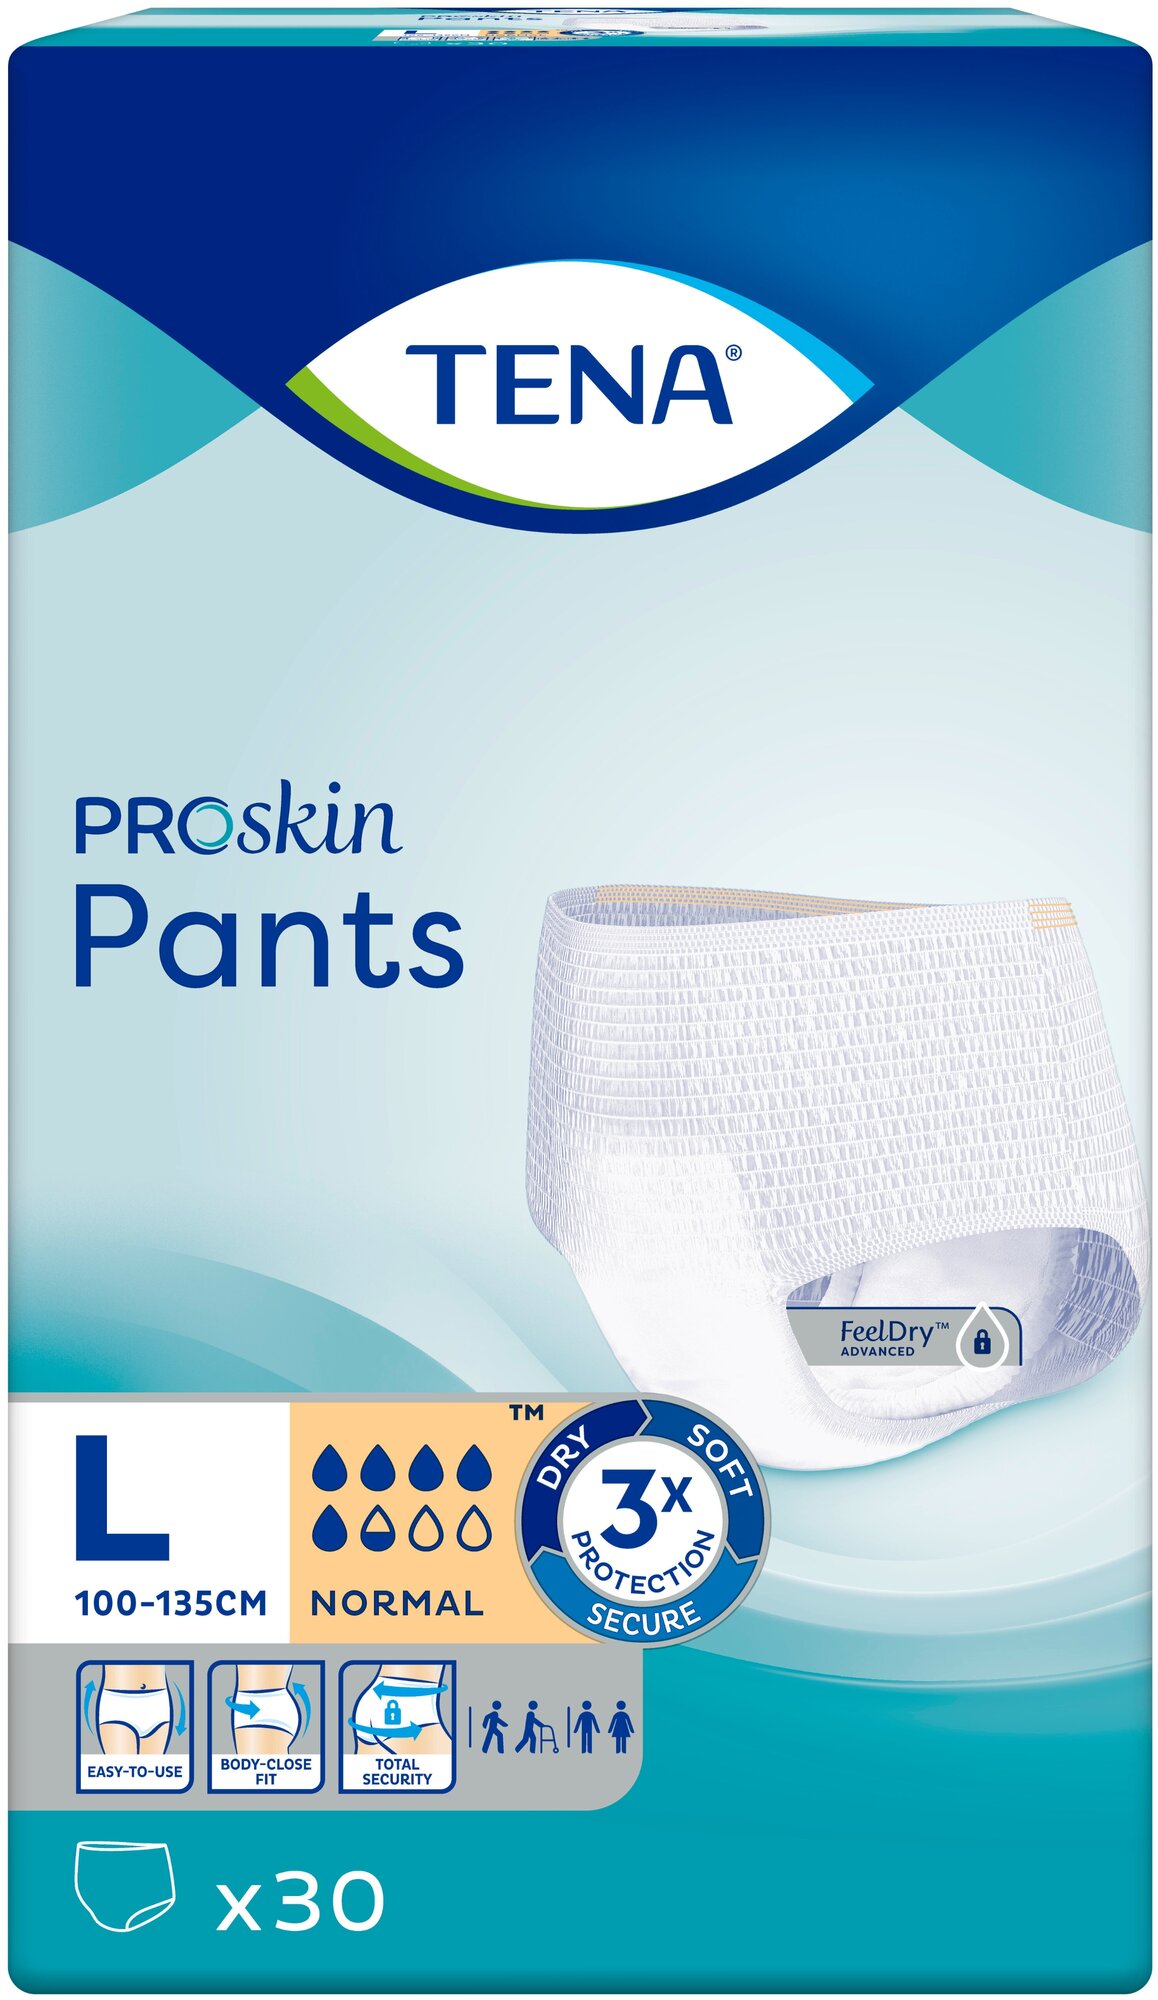 Tena Подгузники-трусы Tena ProSkin Pants Normal Large, объем талии 100-135 см, 30 шт.